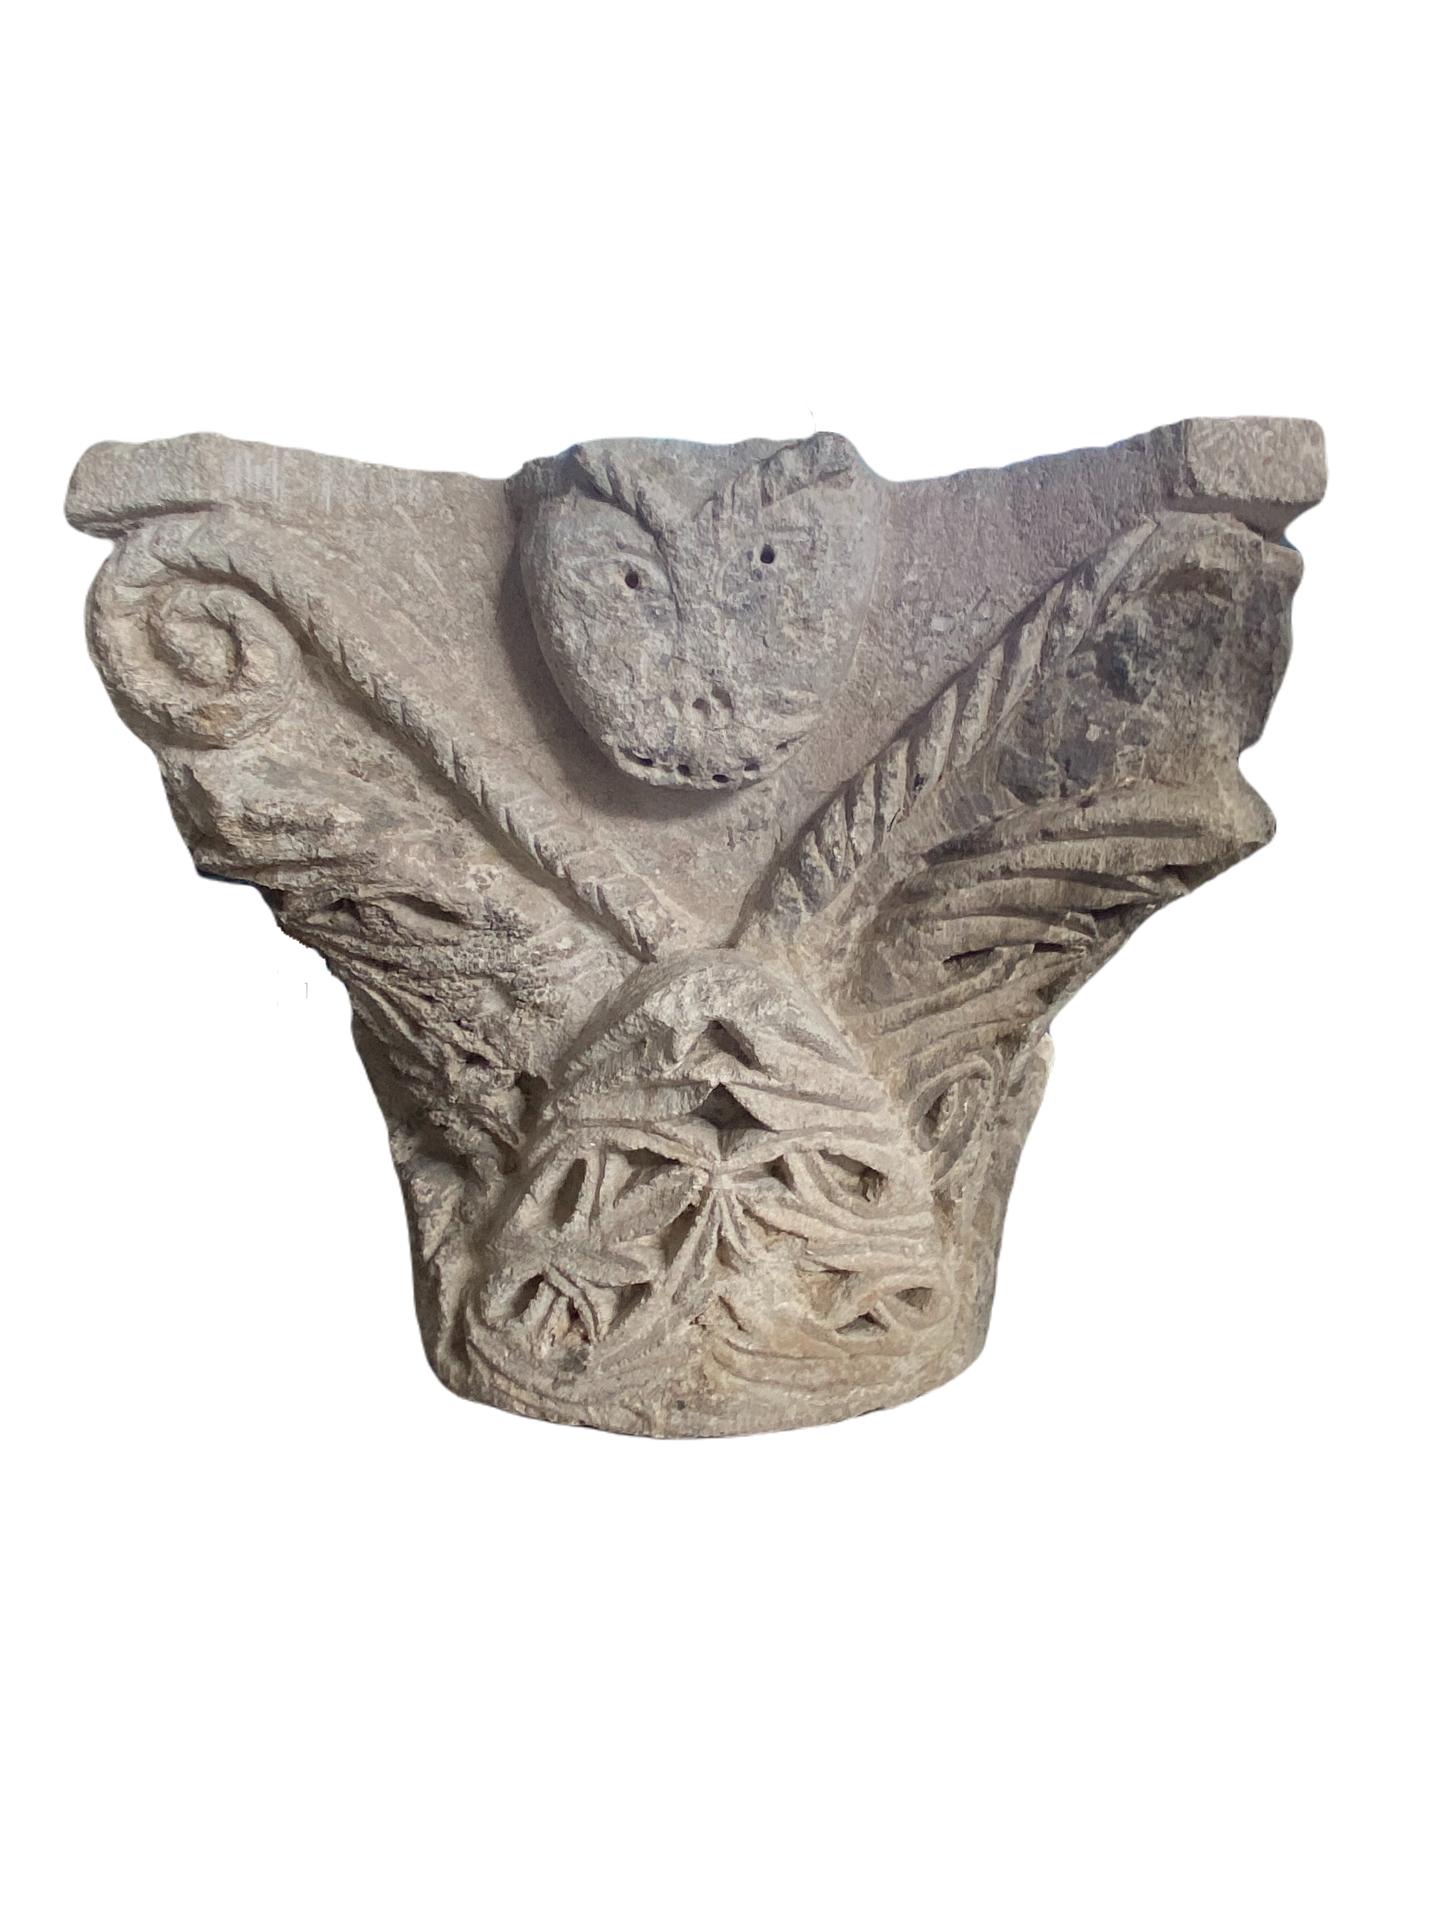 Unknown Figurative Sculpture - Important Romanesque capital